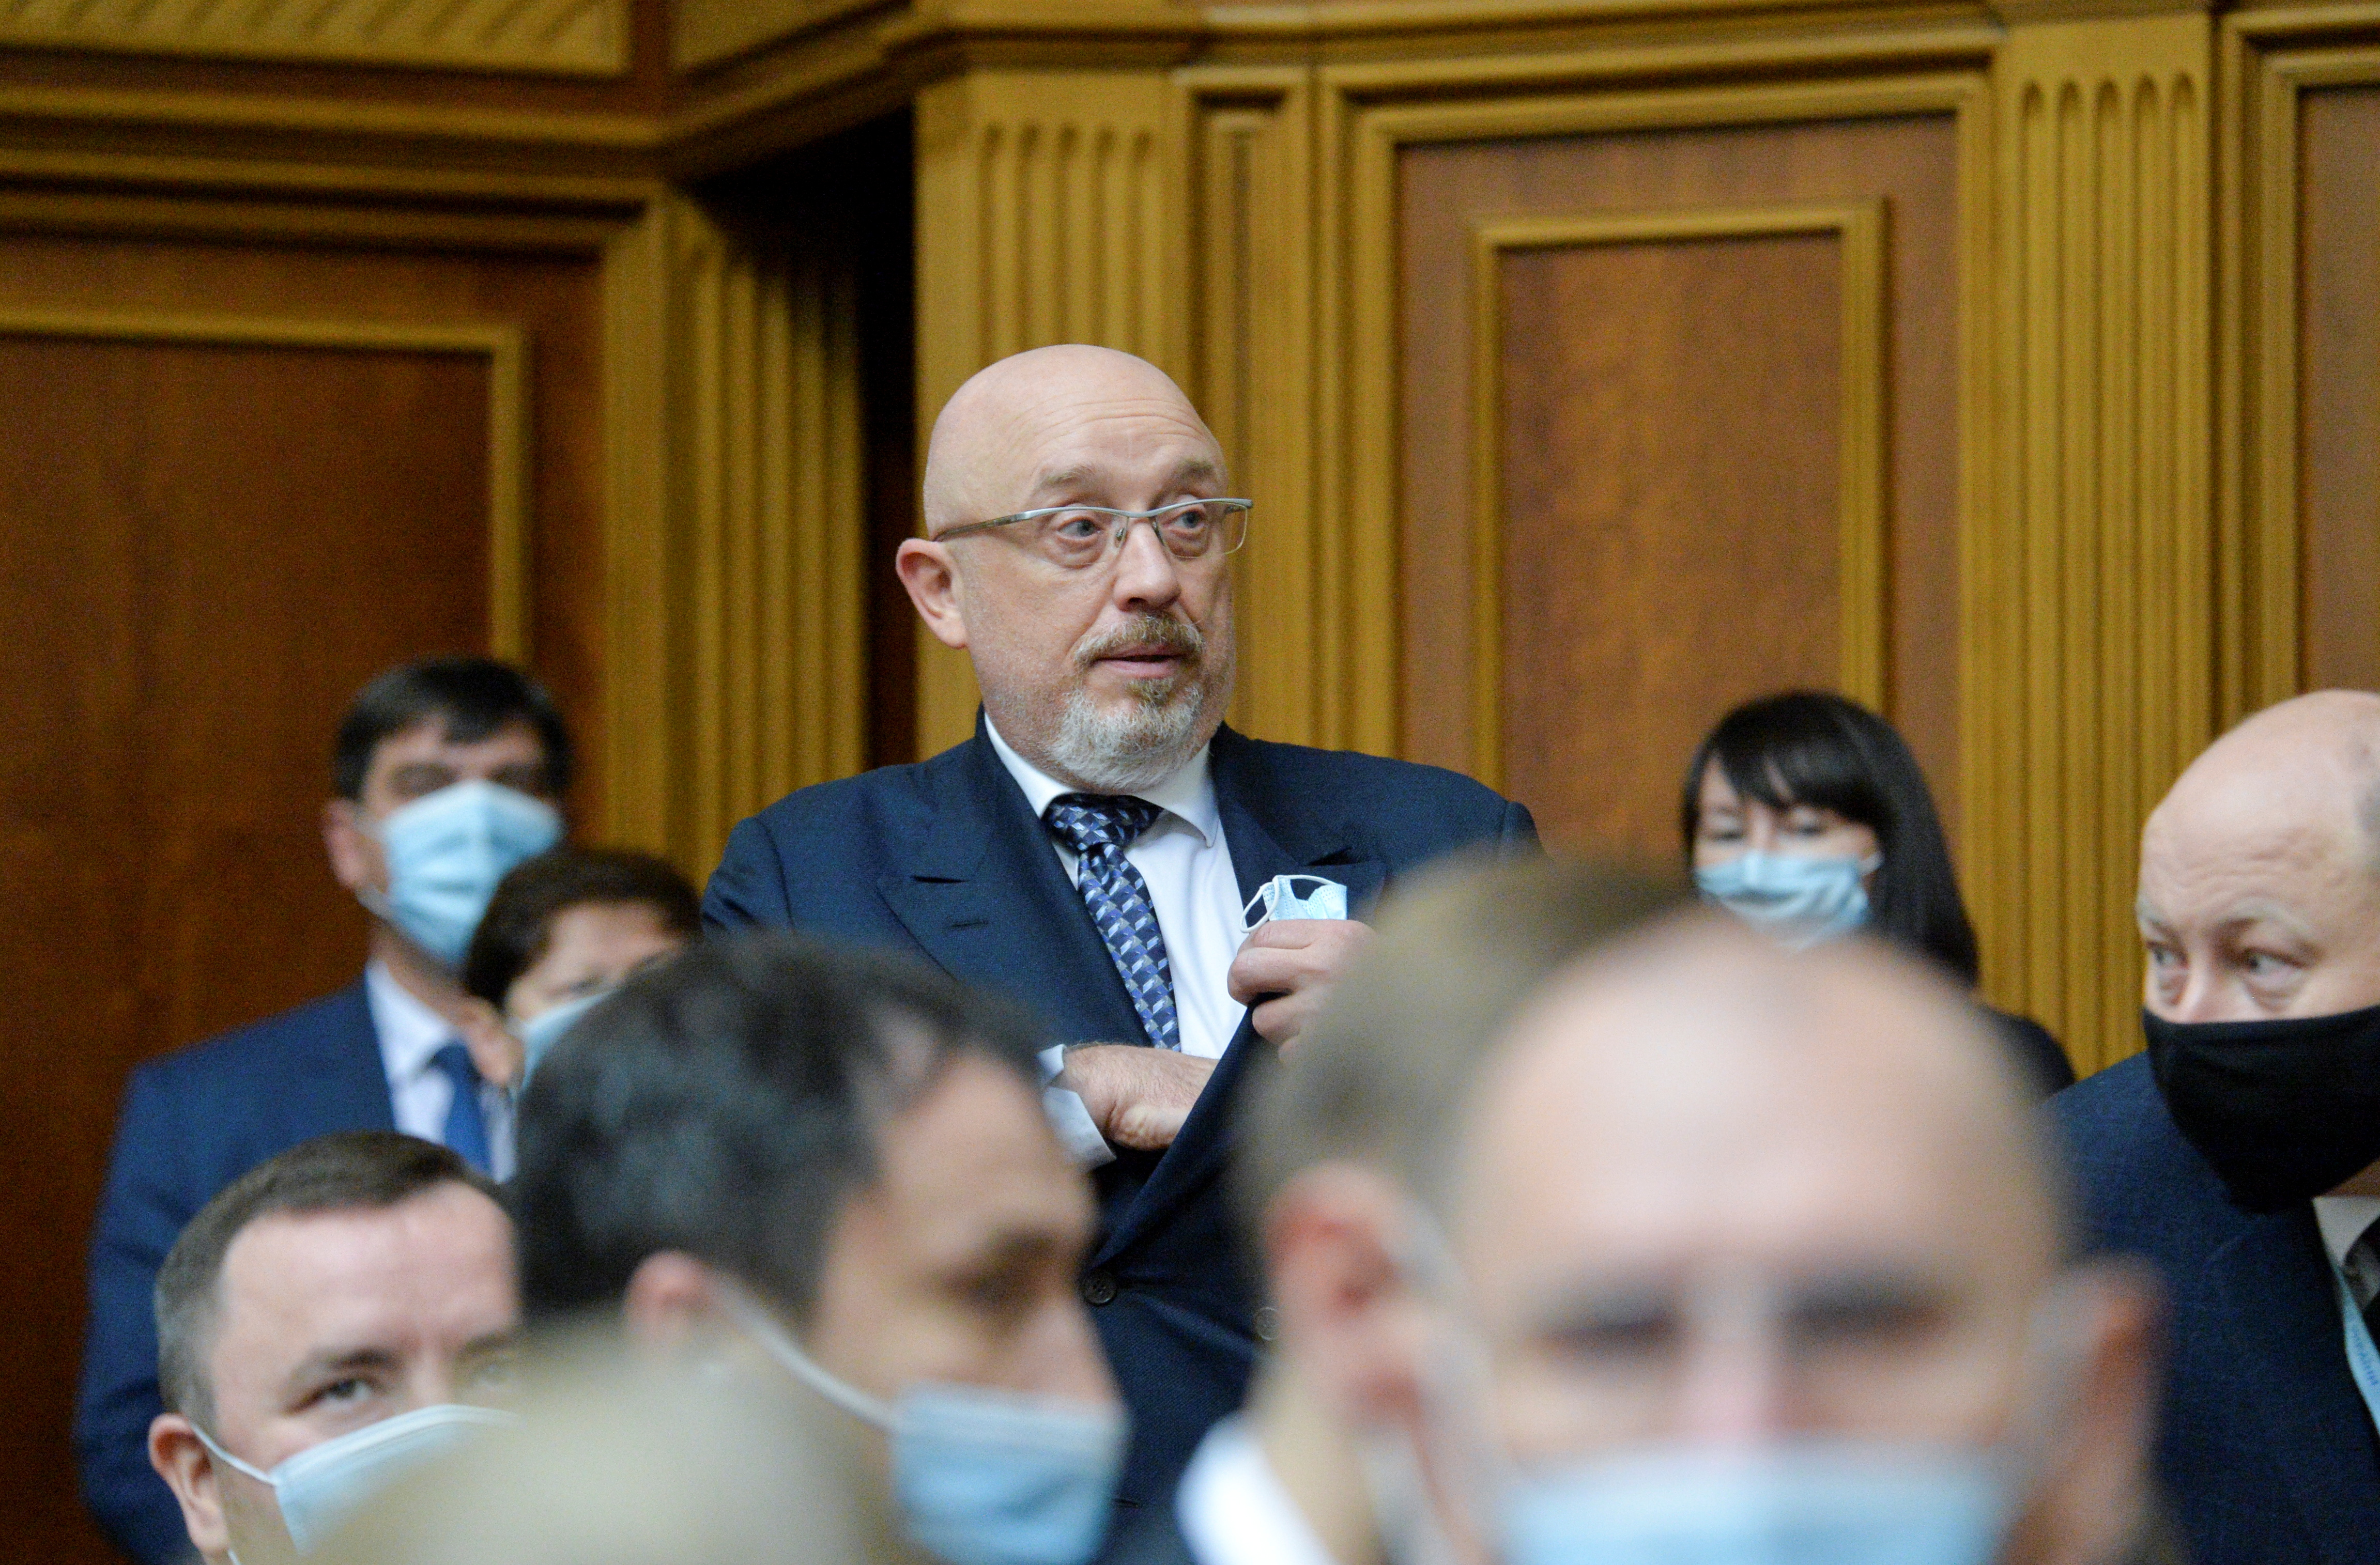 Newly appointed Defence Minister of Ukraine Oleksii Reznikov attends a session of parliament in Kyiv, Ukraine November 4, 2021. REUTERS/Oleksandr Klymenko